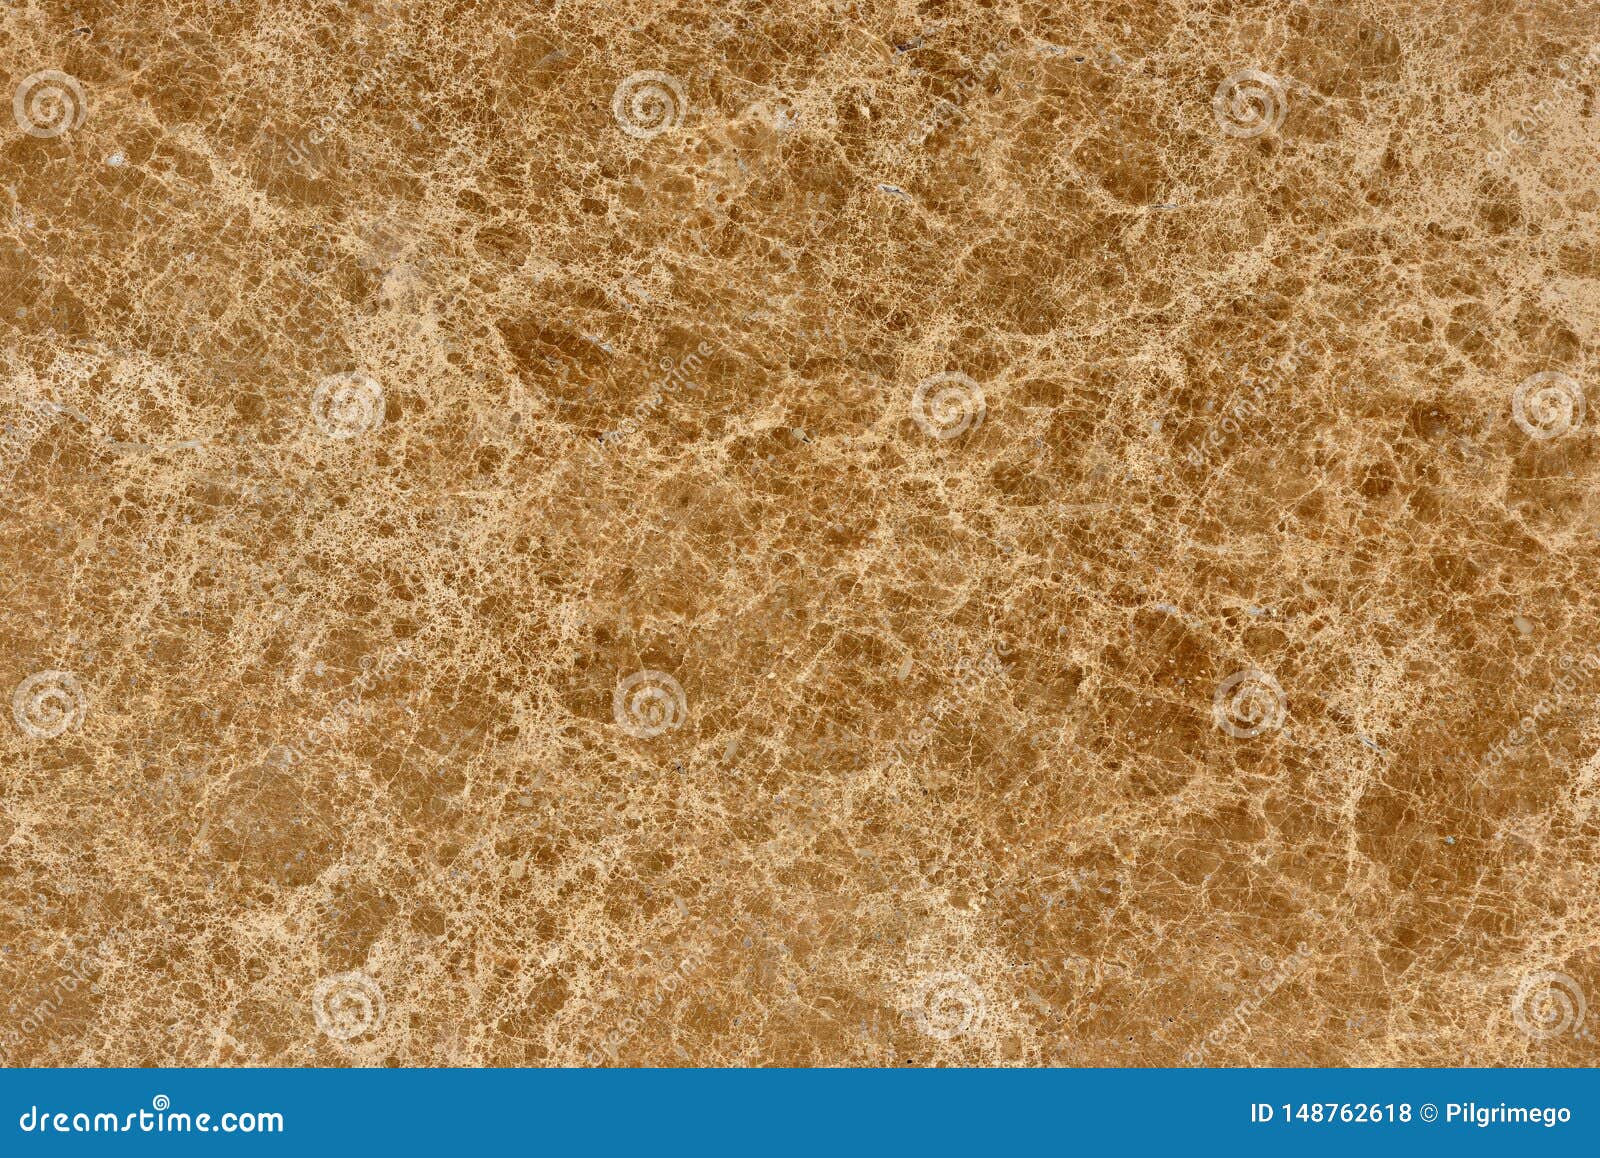 real natural marble emperador medium texture pattern. background